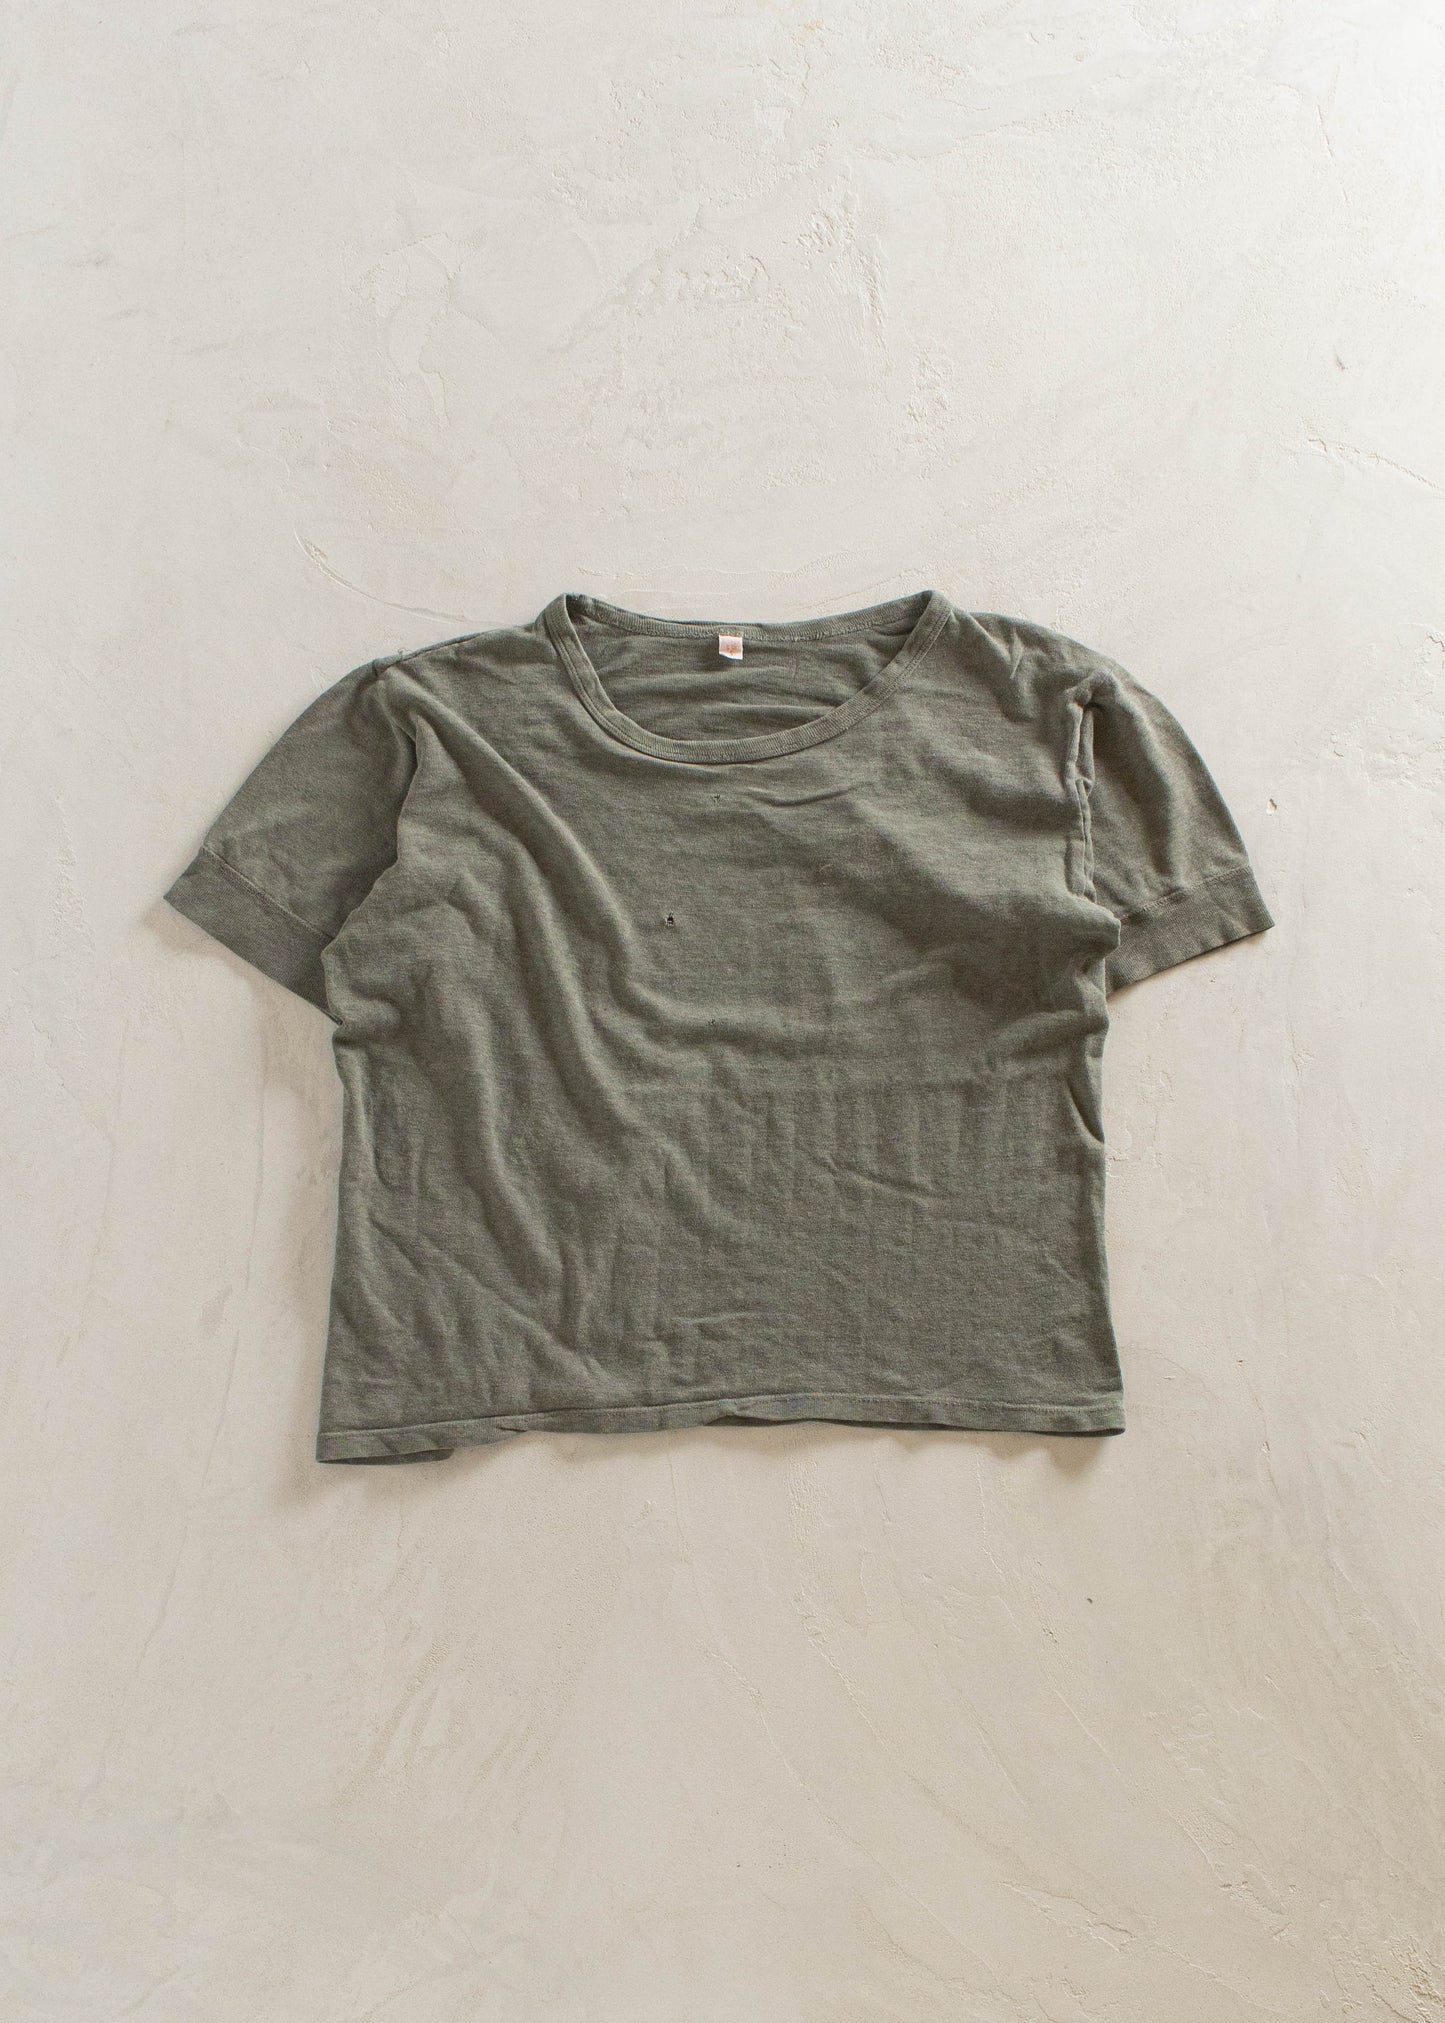 1980s Military T-Shirt Size L/XL